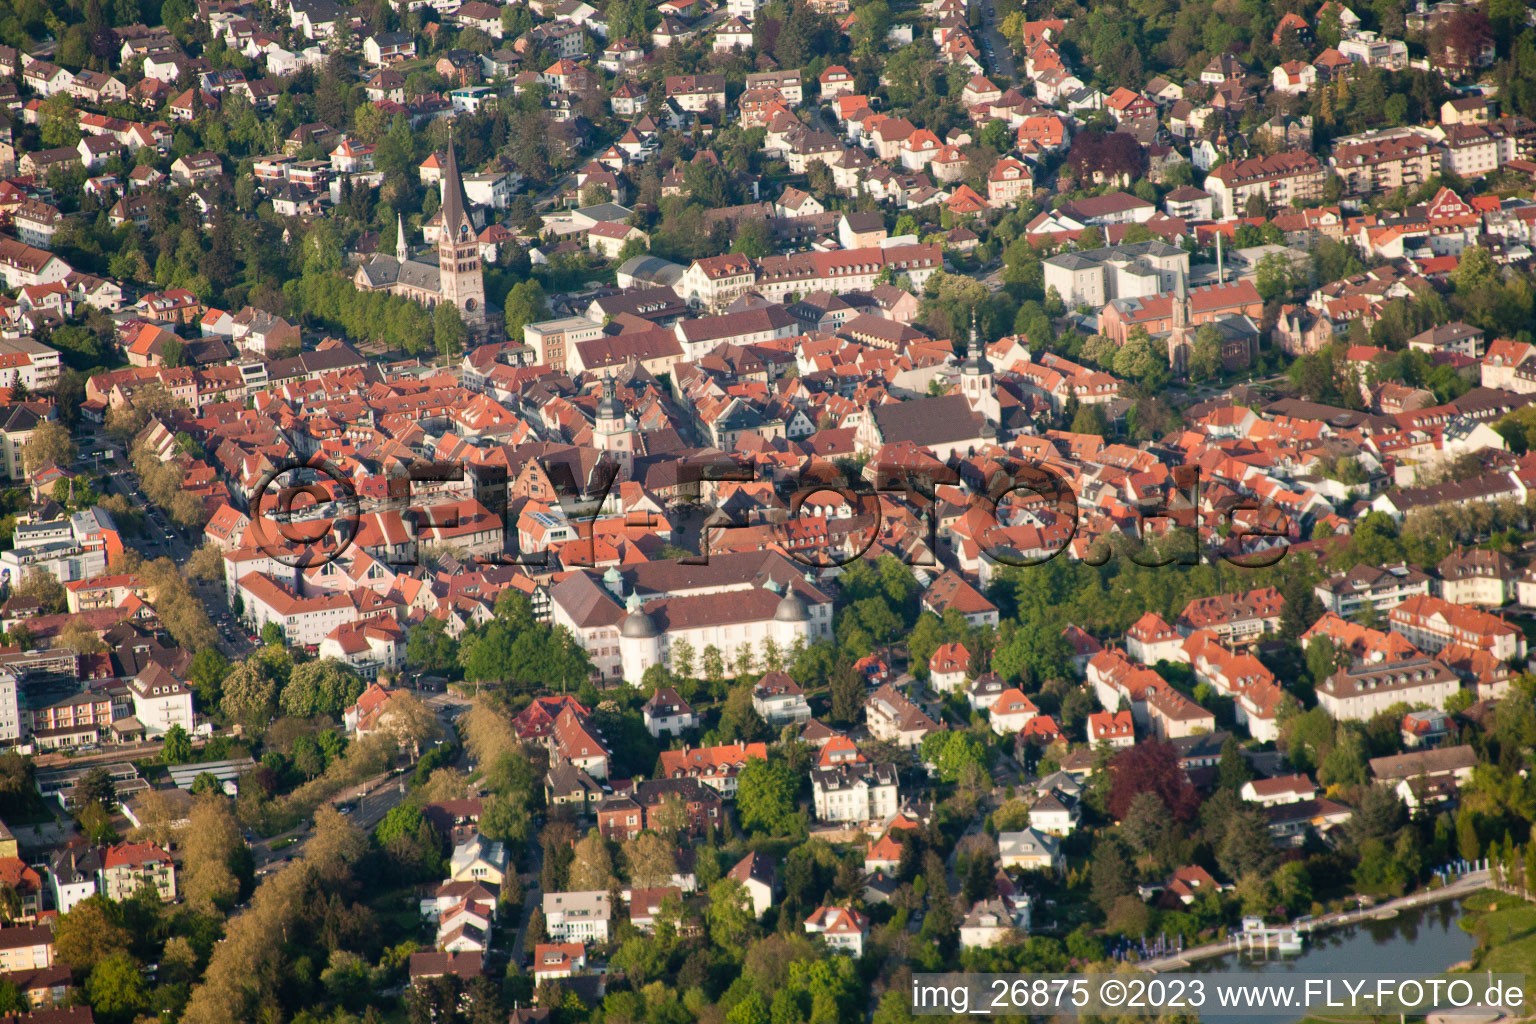 Luftbild von Ettlinger Schloss in Ettlingen im Bundesland Baden-Württemberg, Deutschland